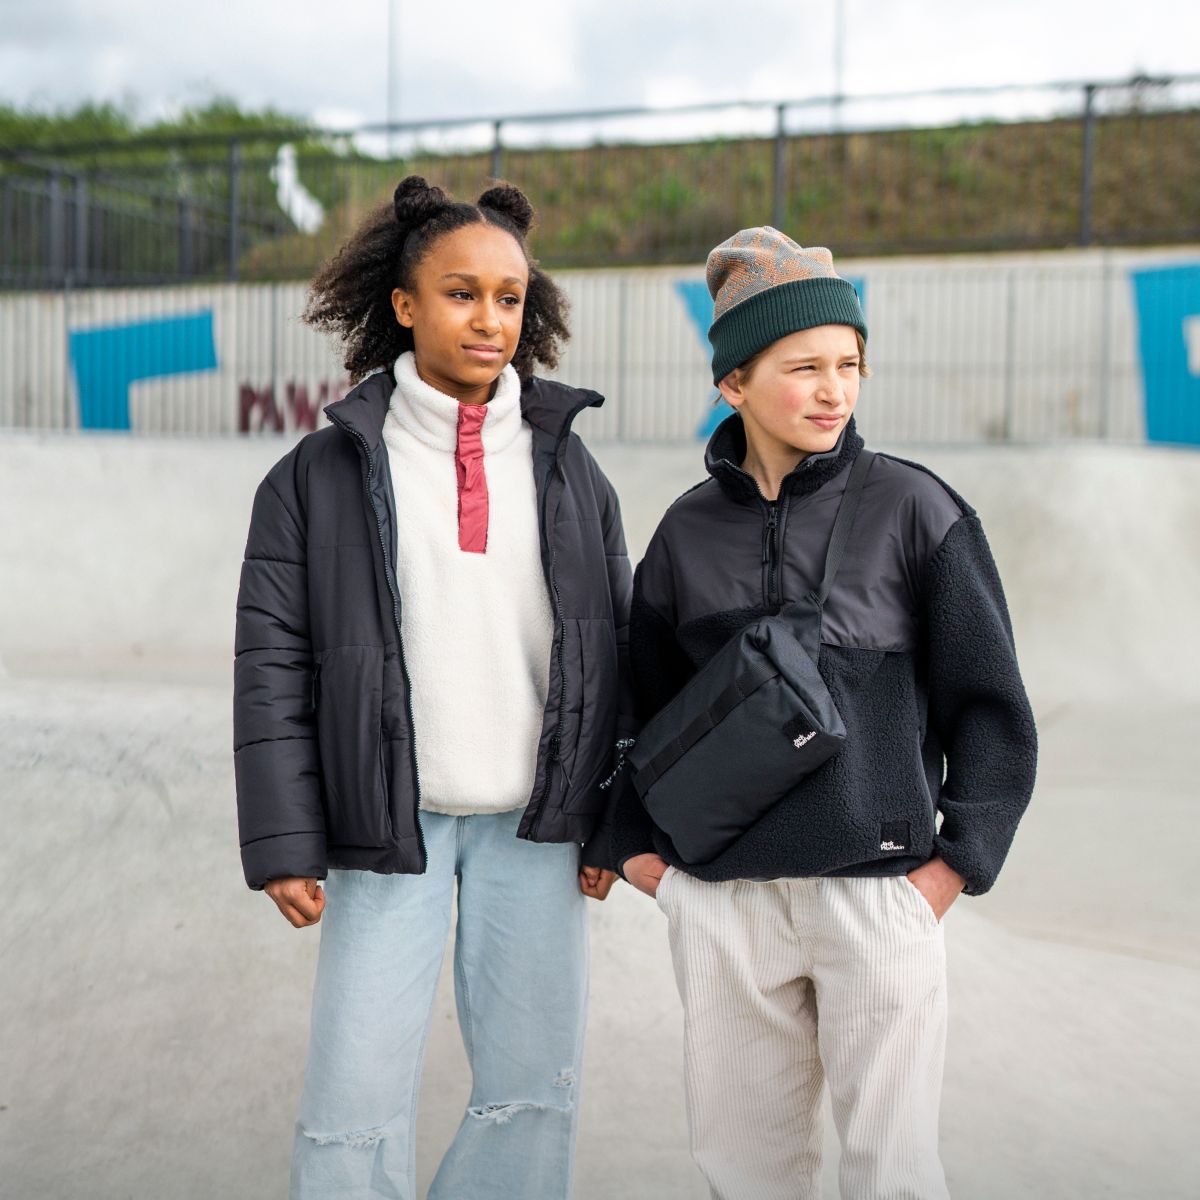 Girl and boy on skateboarding court